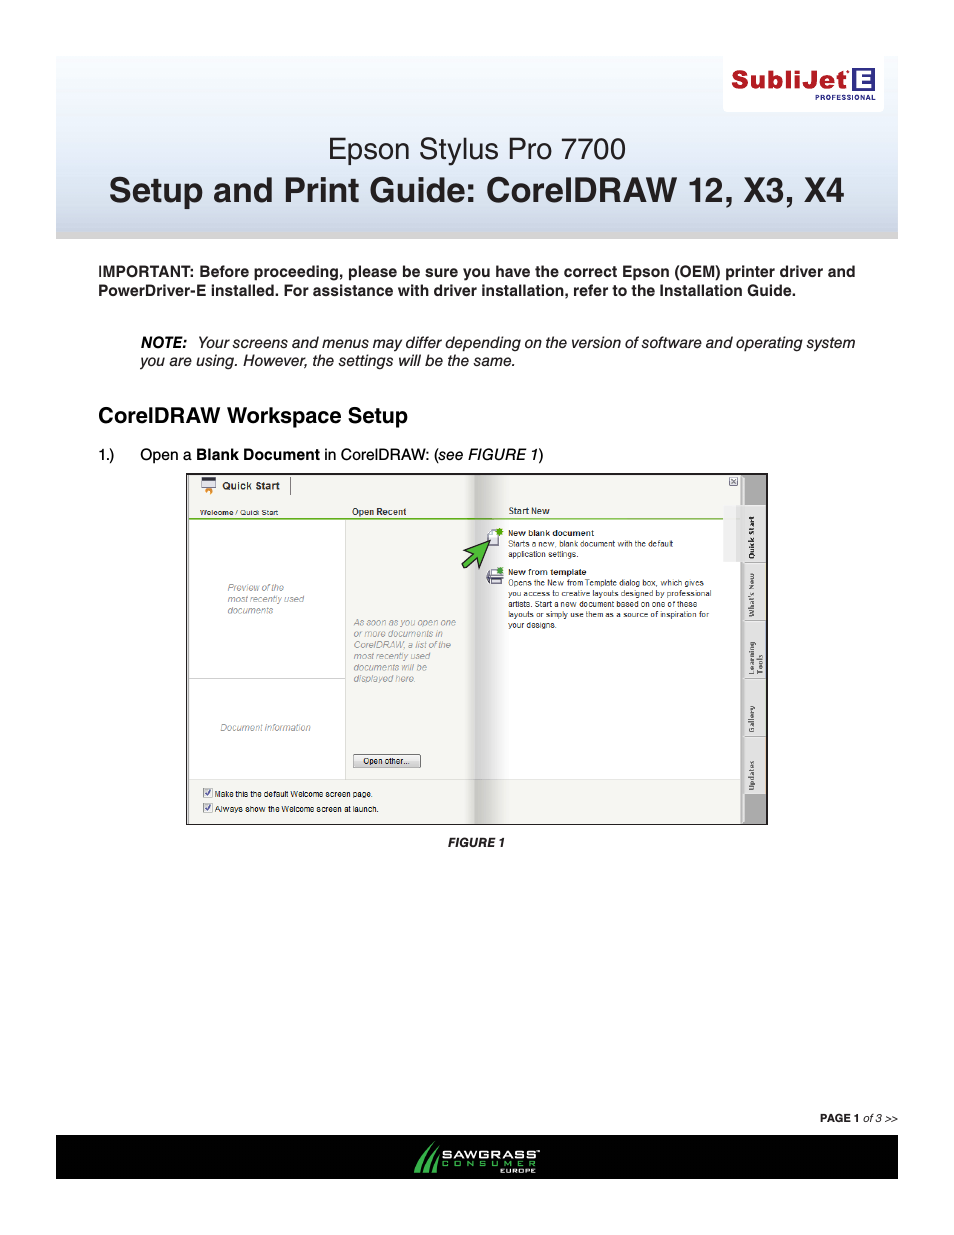 SubliJet E Epson Stylus Pro 7700 (Windows Power Driver Setup): Print & Setup Guide CorelDRAW 12 - X4